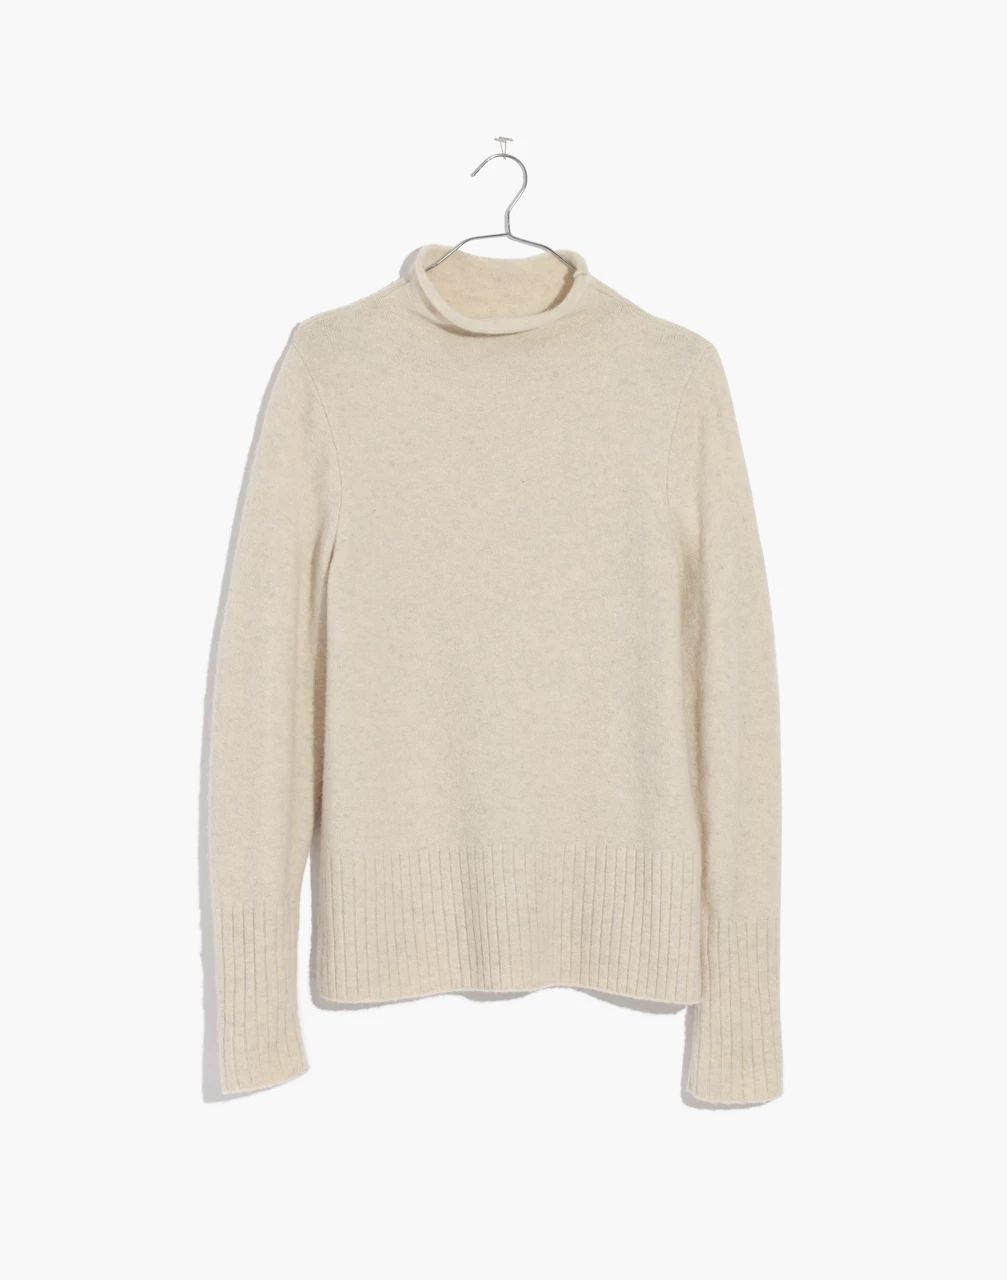 Inland Turtleneck Sweater in Coziest Yarn | Madewell